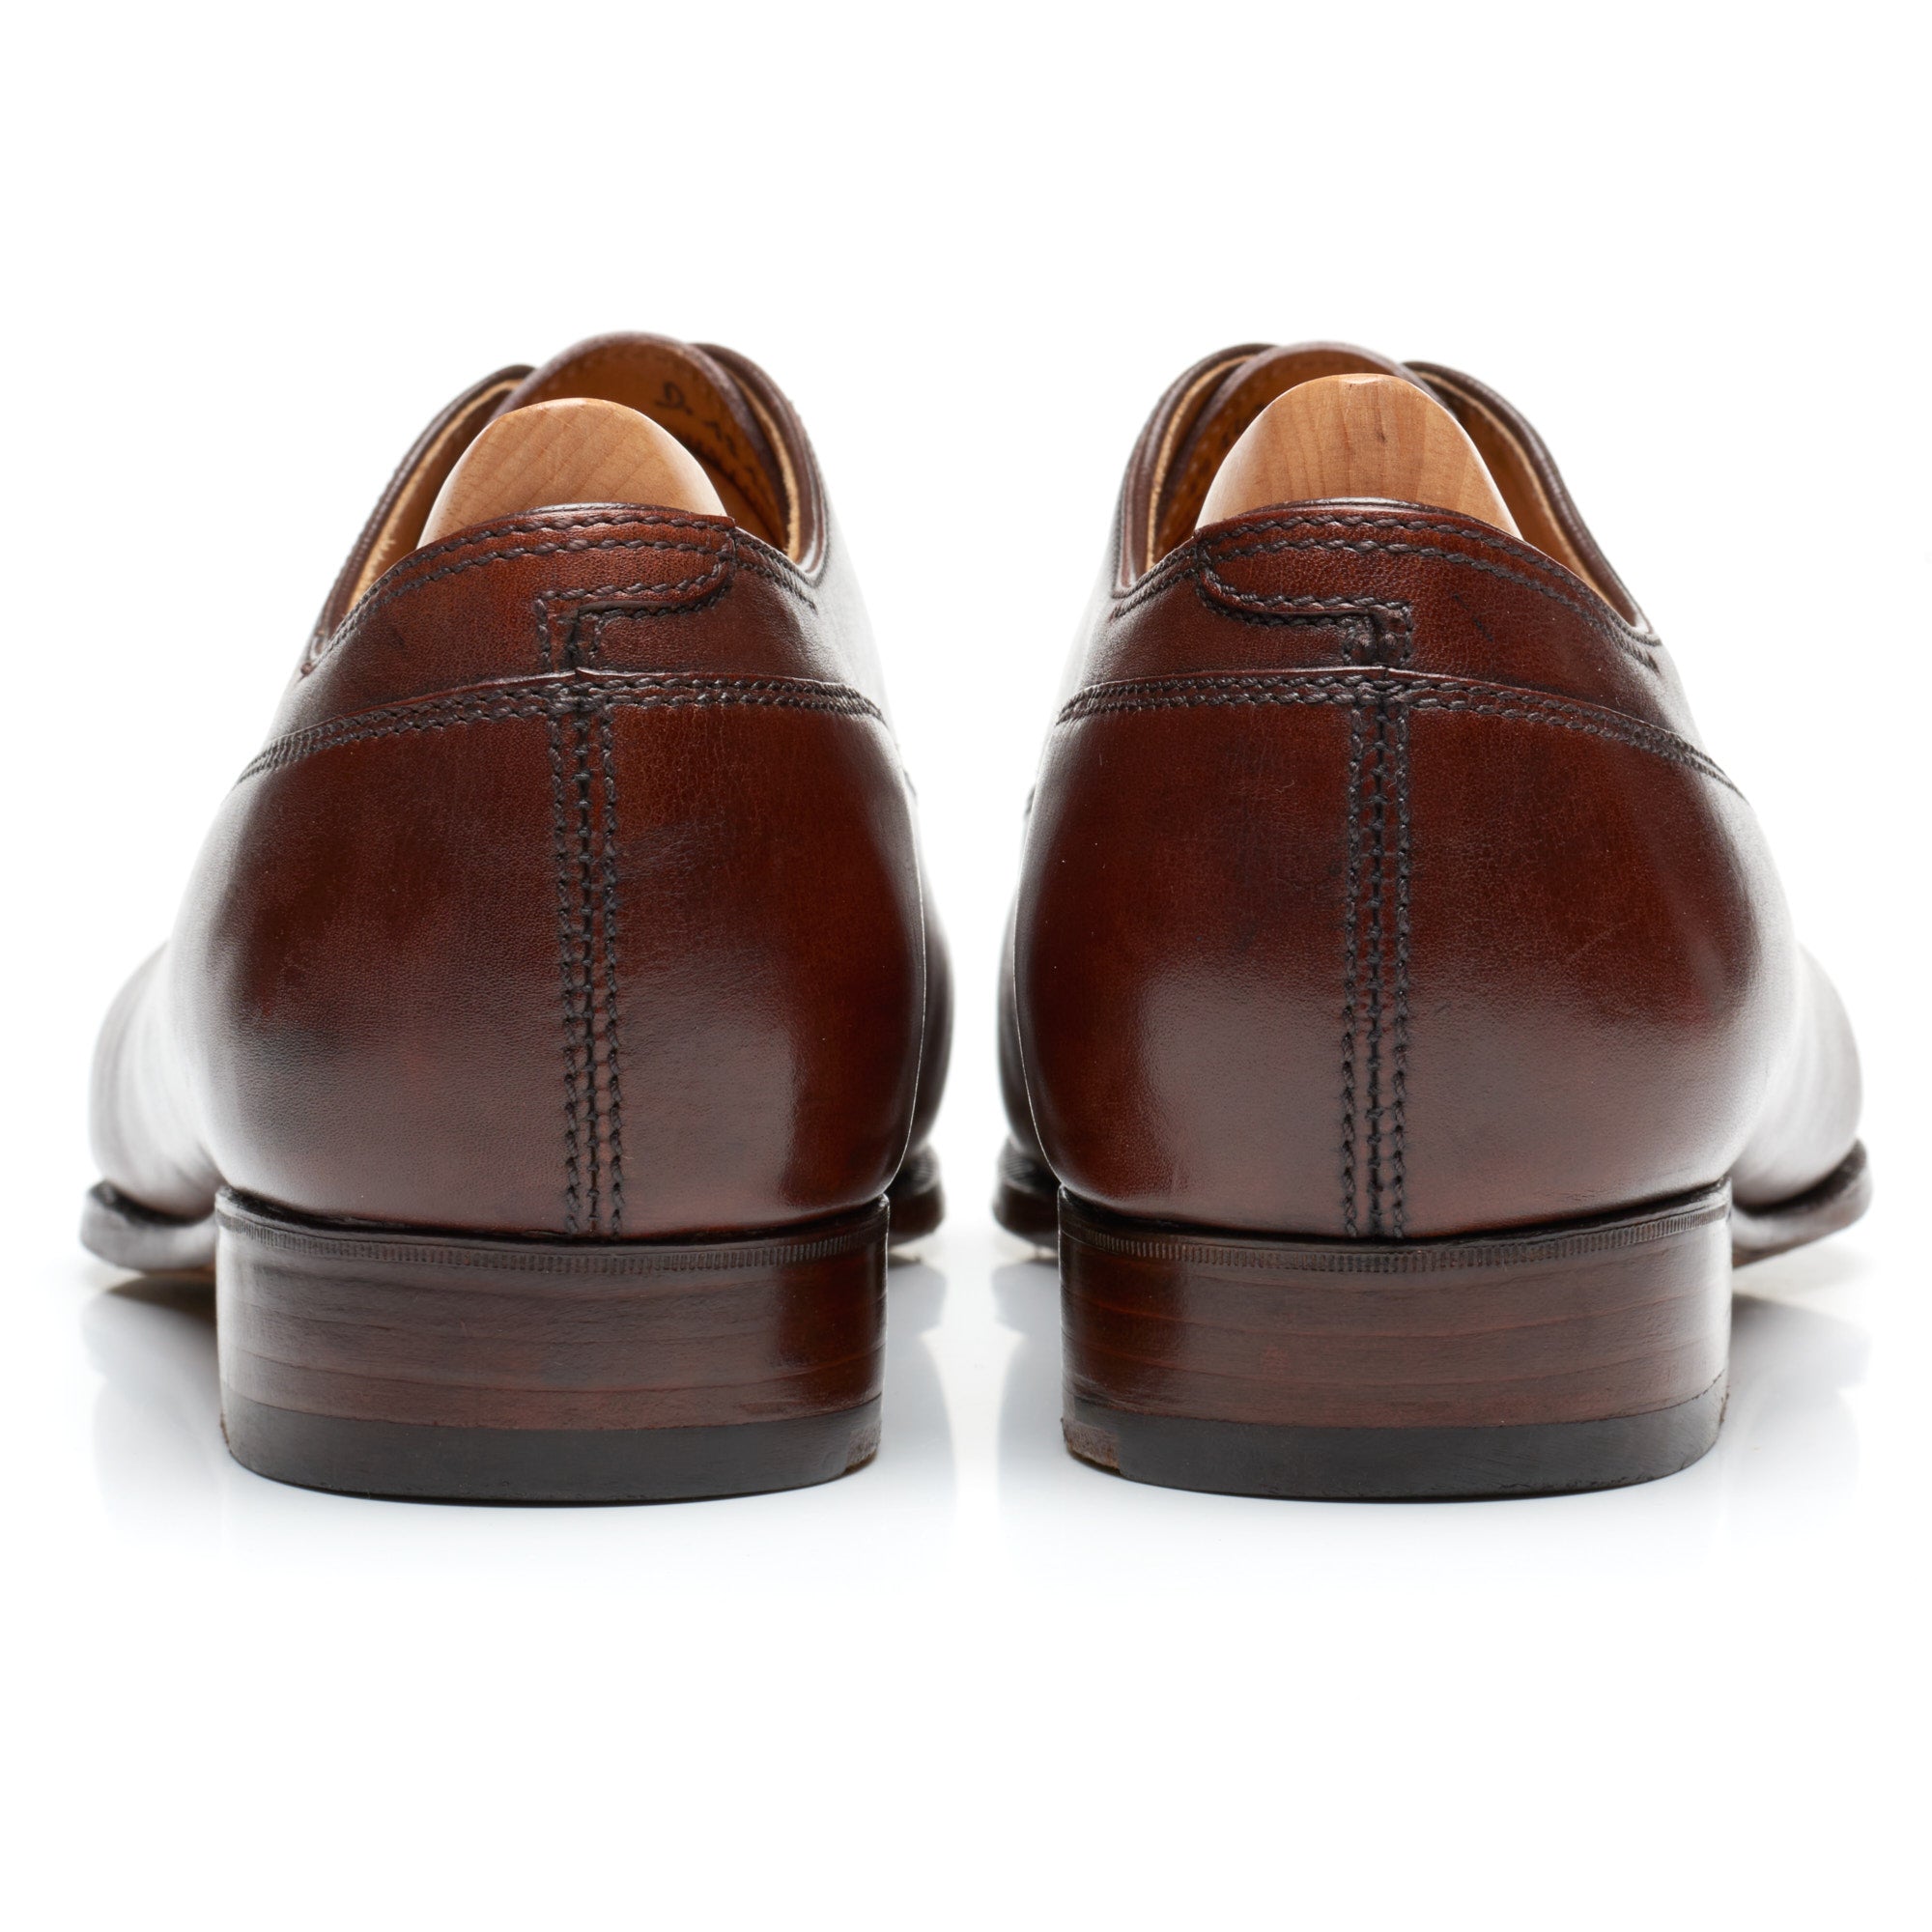 JOHN LOBB Paris Bespoke Brown Museum Calf Leather Oxford Shoes UK 7.5 US 8.5 JOHN LOBB